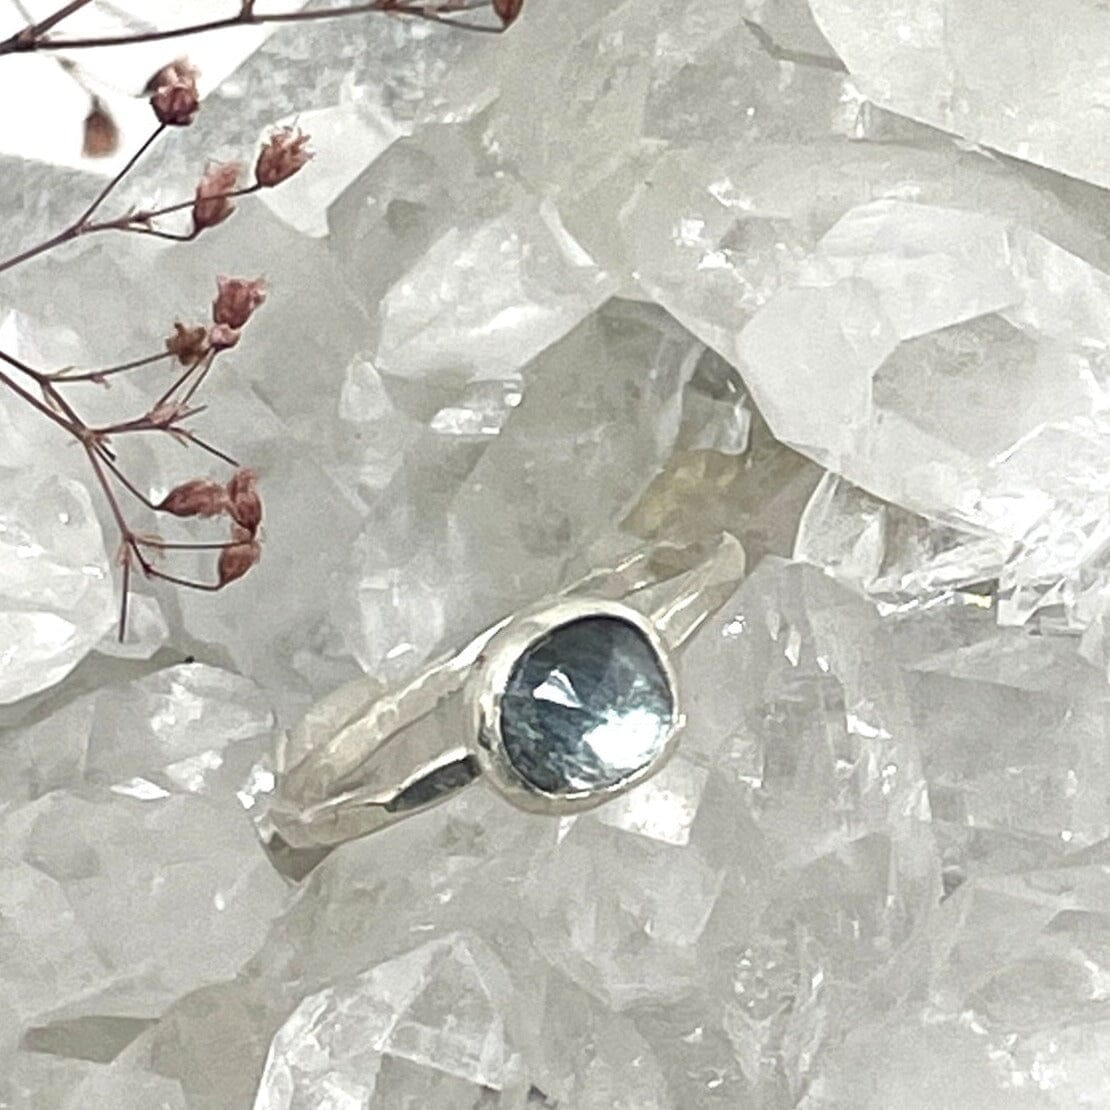 Rose Cut Moss Aquamarine Ring - sterling silver | Stone Love ring Amanda K Lockrow